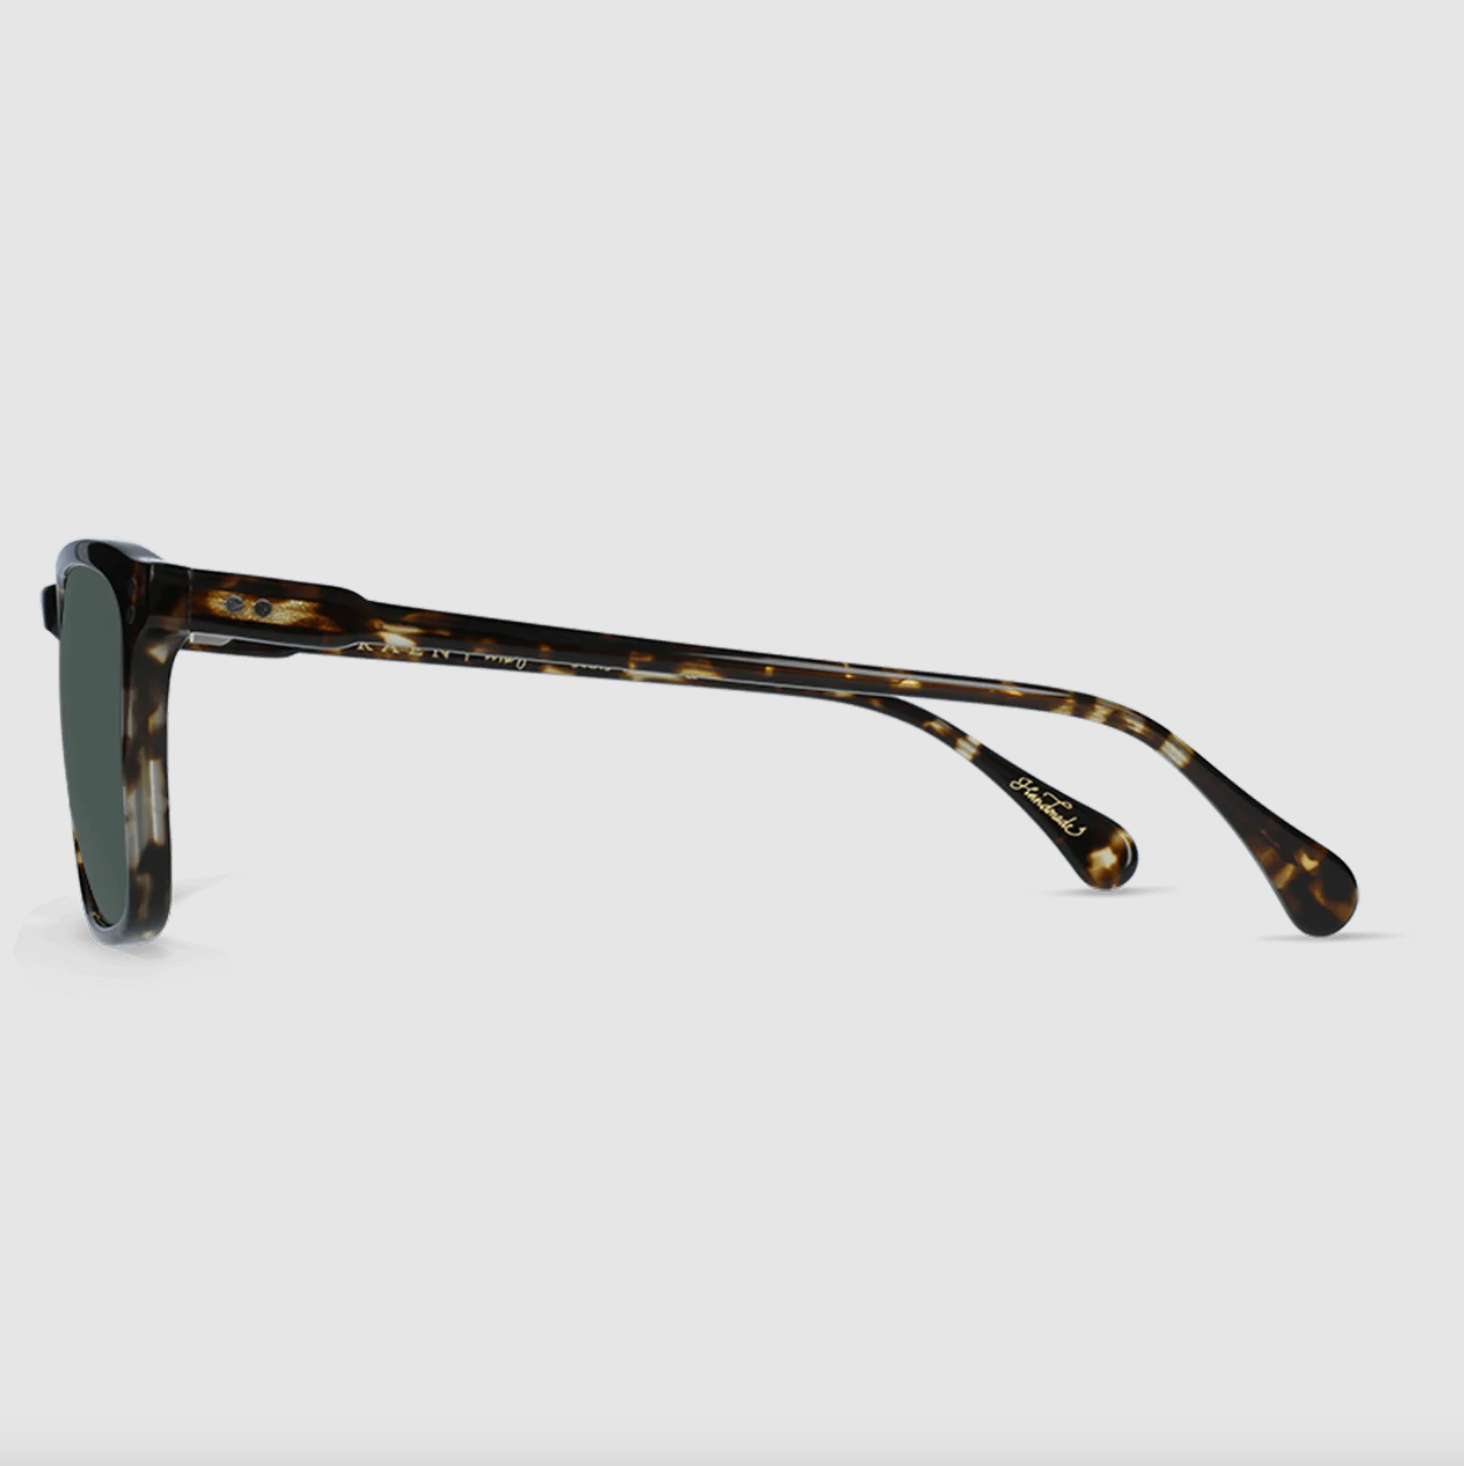 Raen - Wiley Sunglasses - Brindle Tortoise/Green Polarized